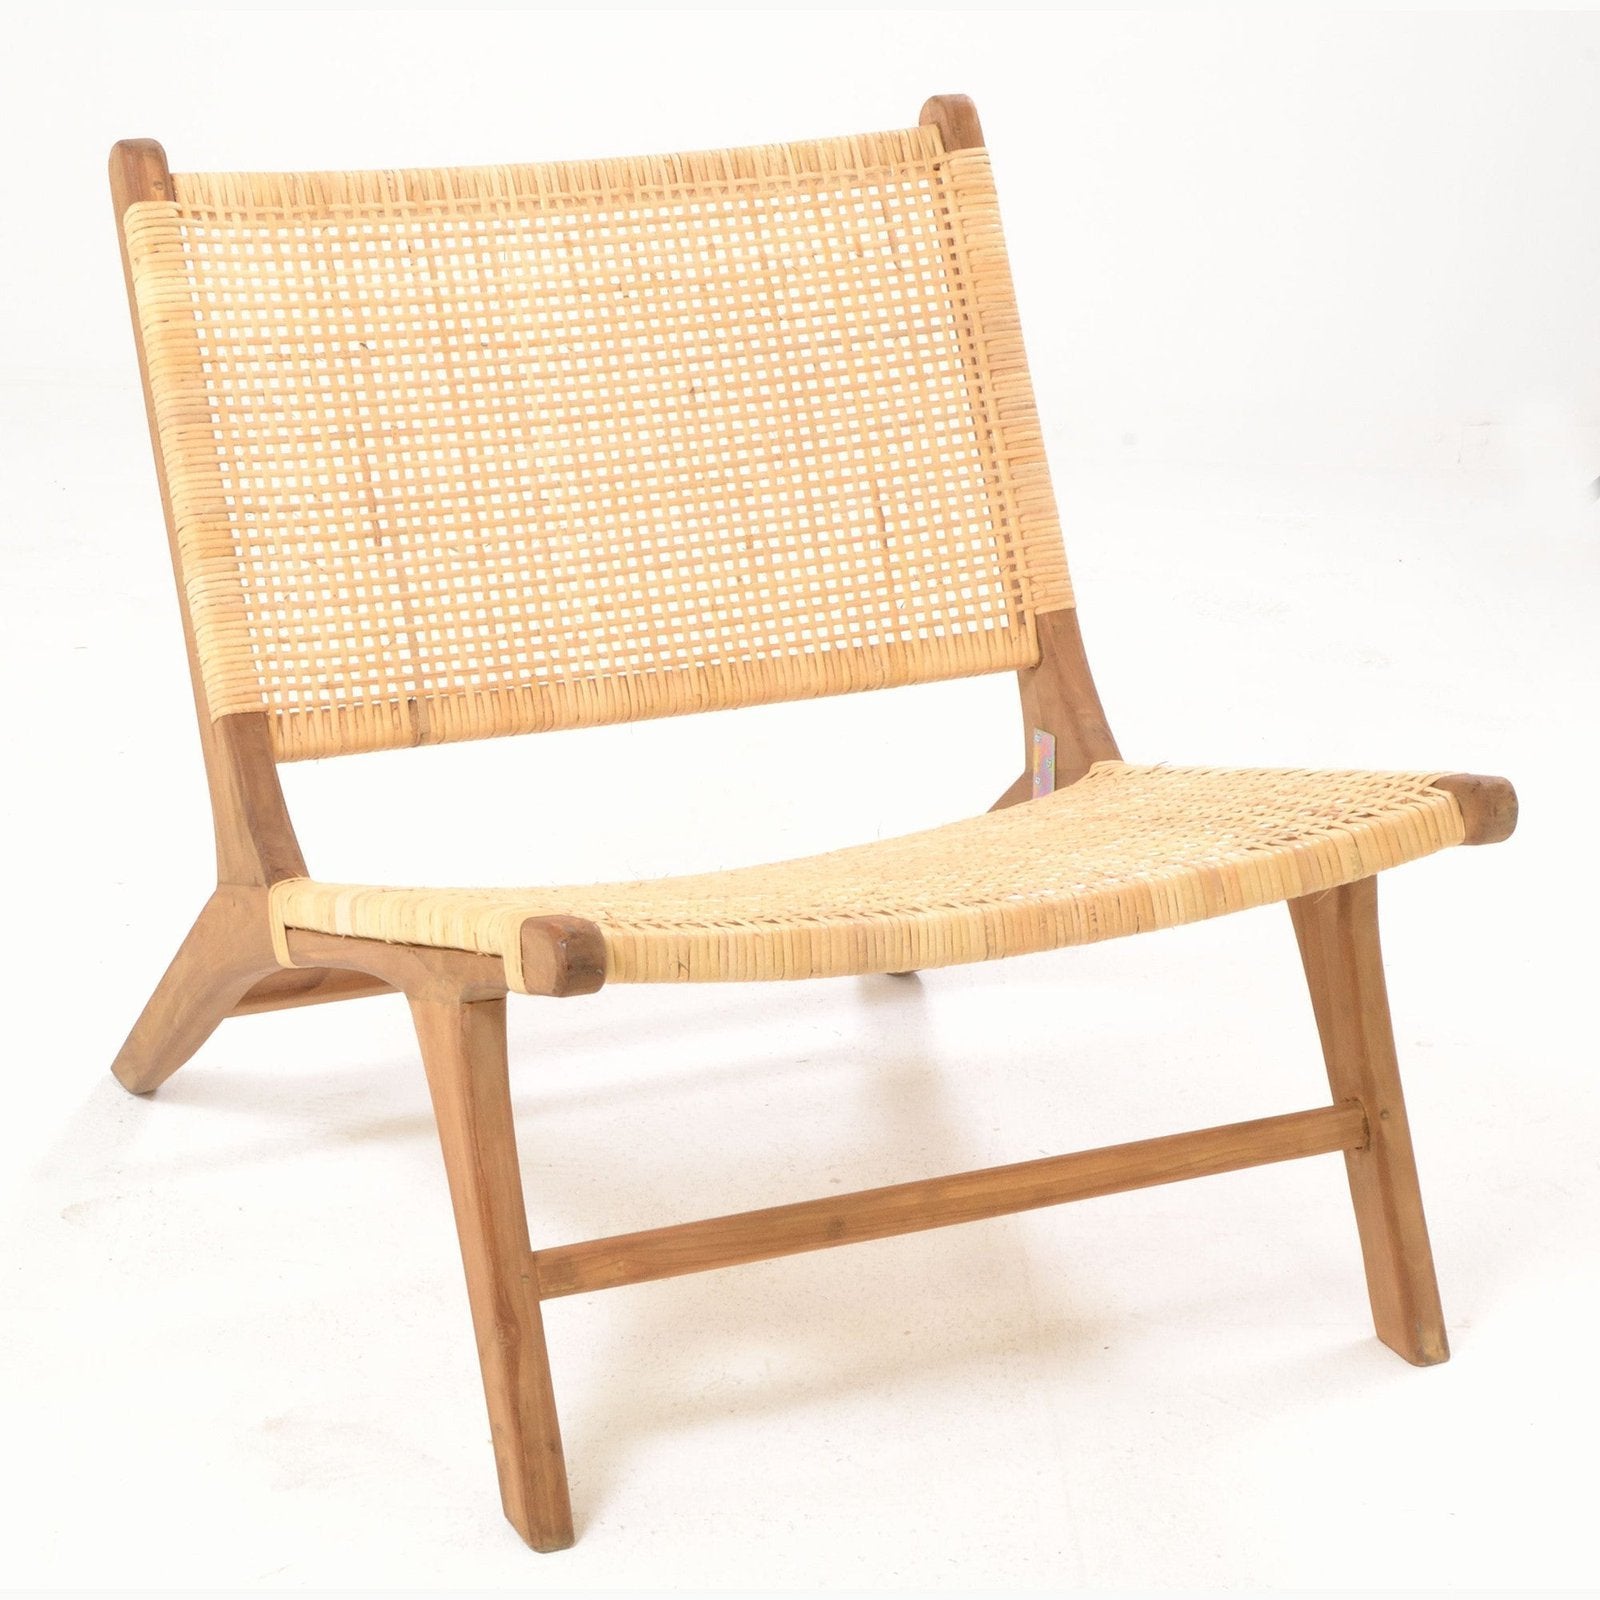 Low Rattan Chair